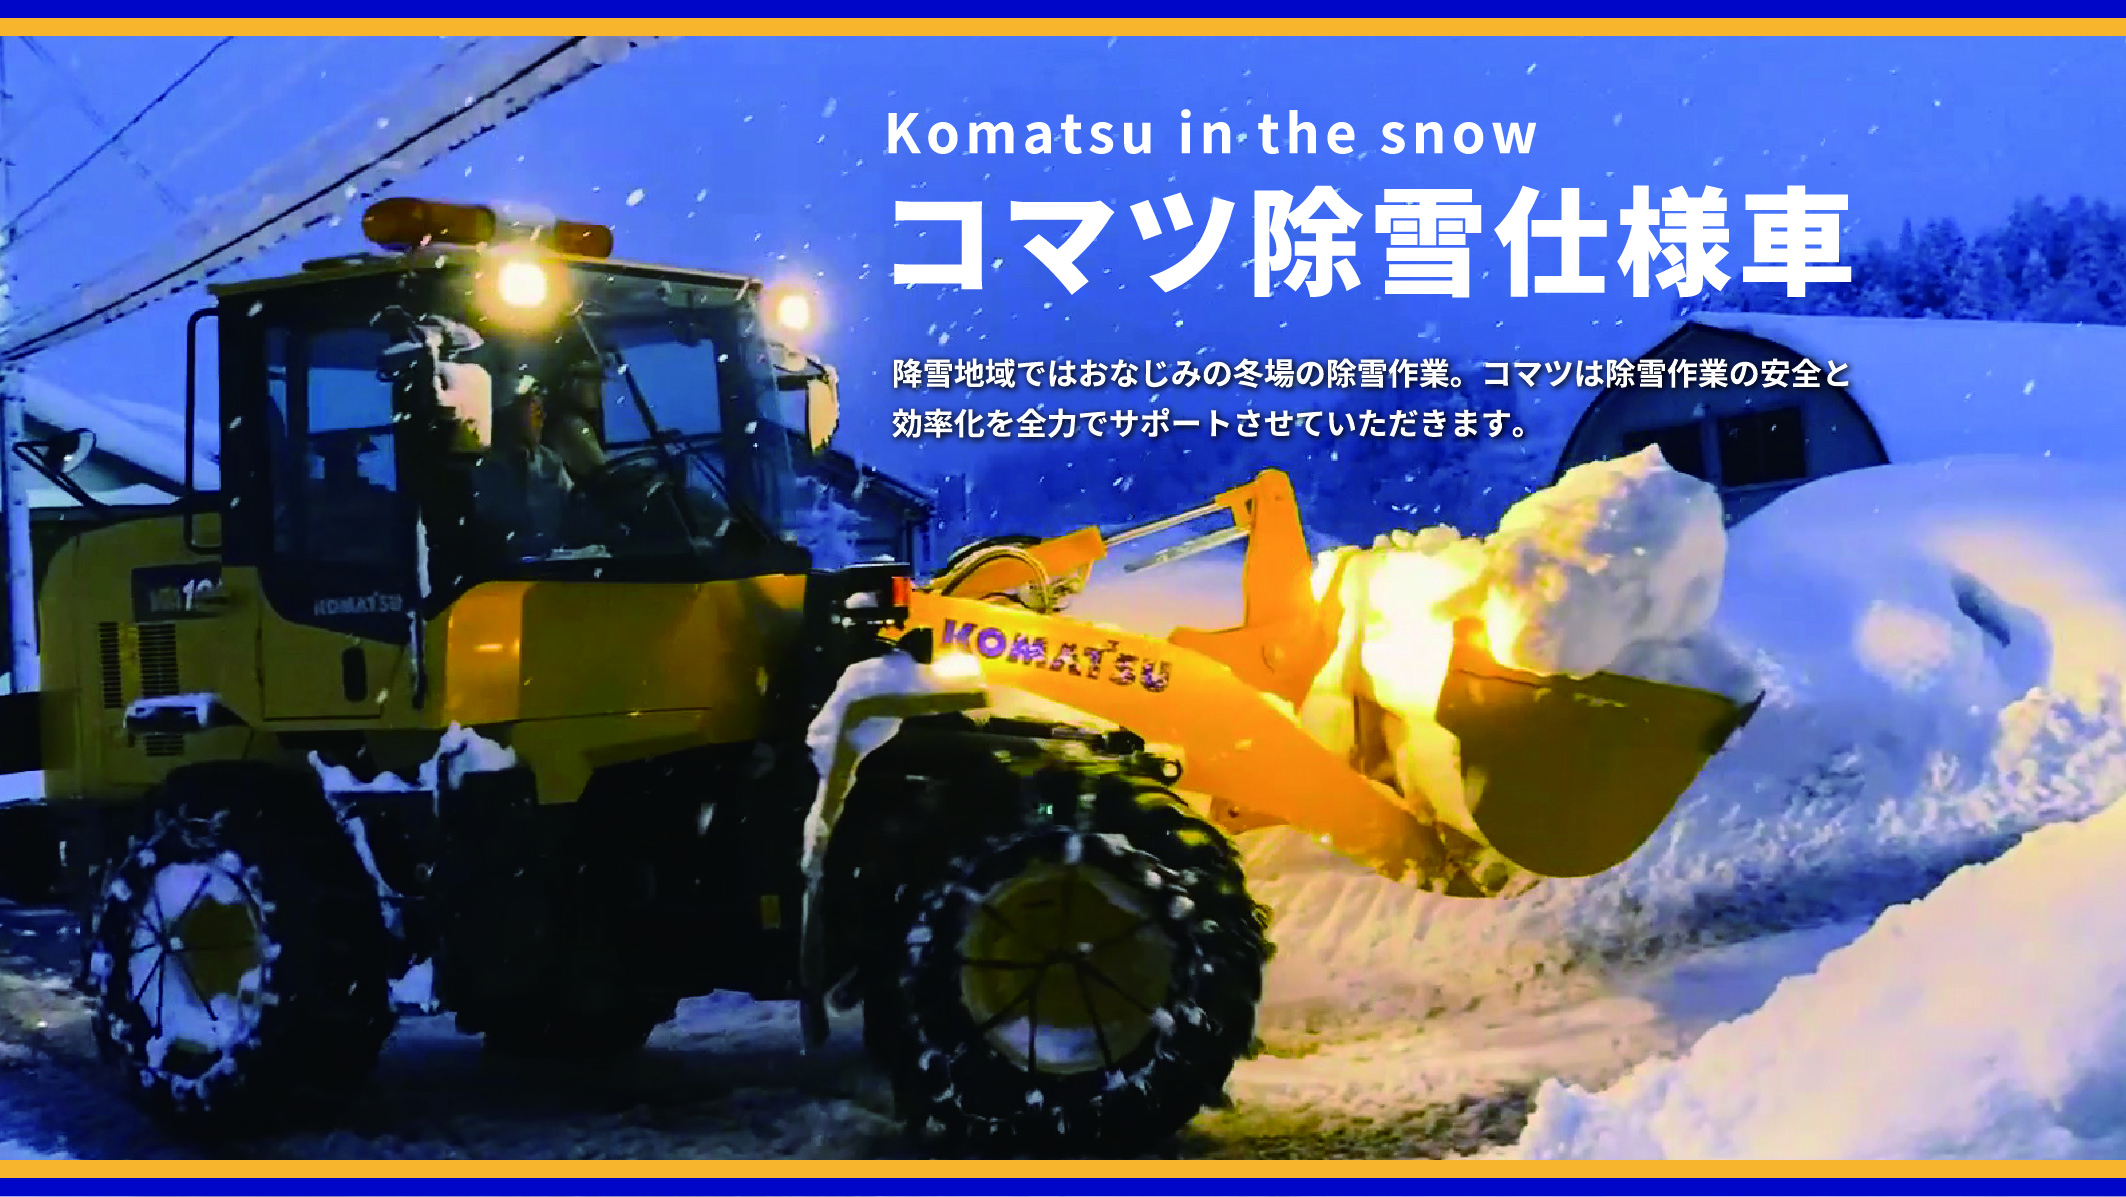 Komatsu in the snow コマツ除雪仕様車 降雪地域ではおなじみの冬場の除雪作業。コマツは除雪作業の安全と効率化を全力でサポートさせていただきます。